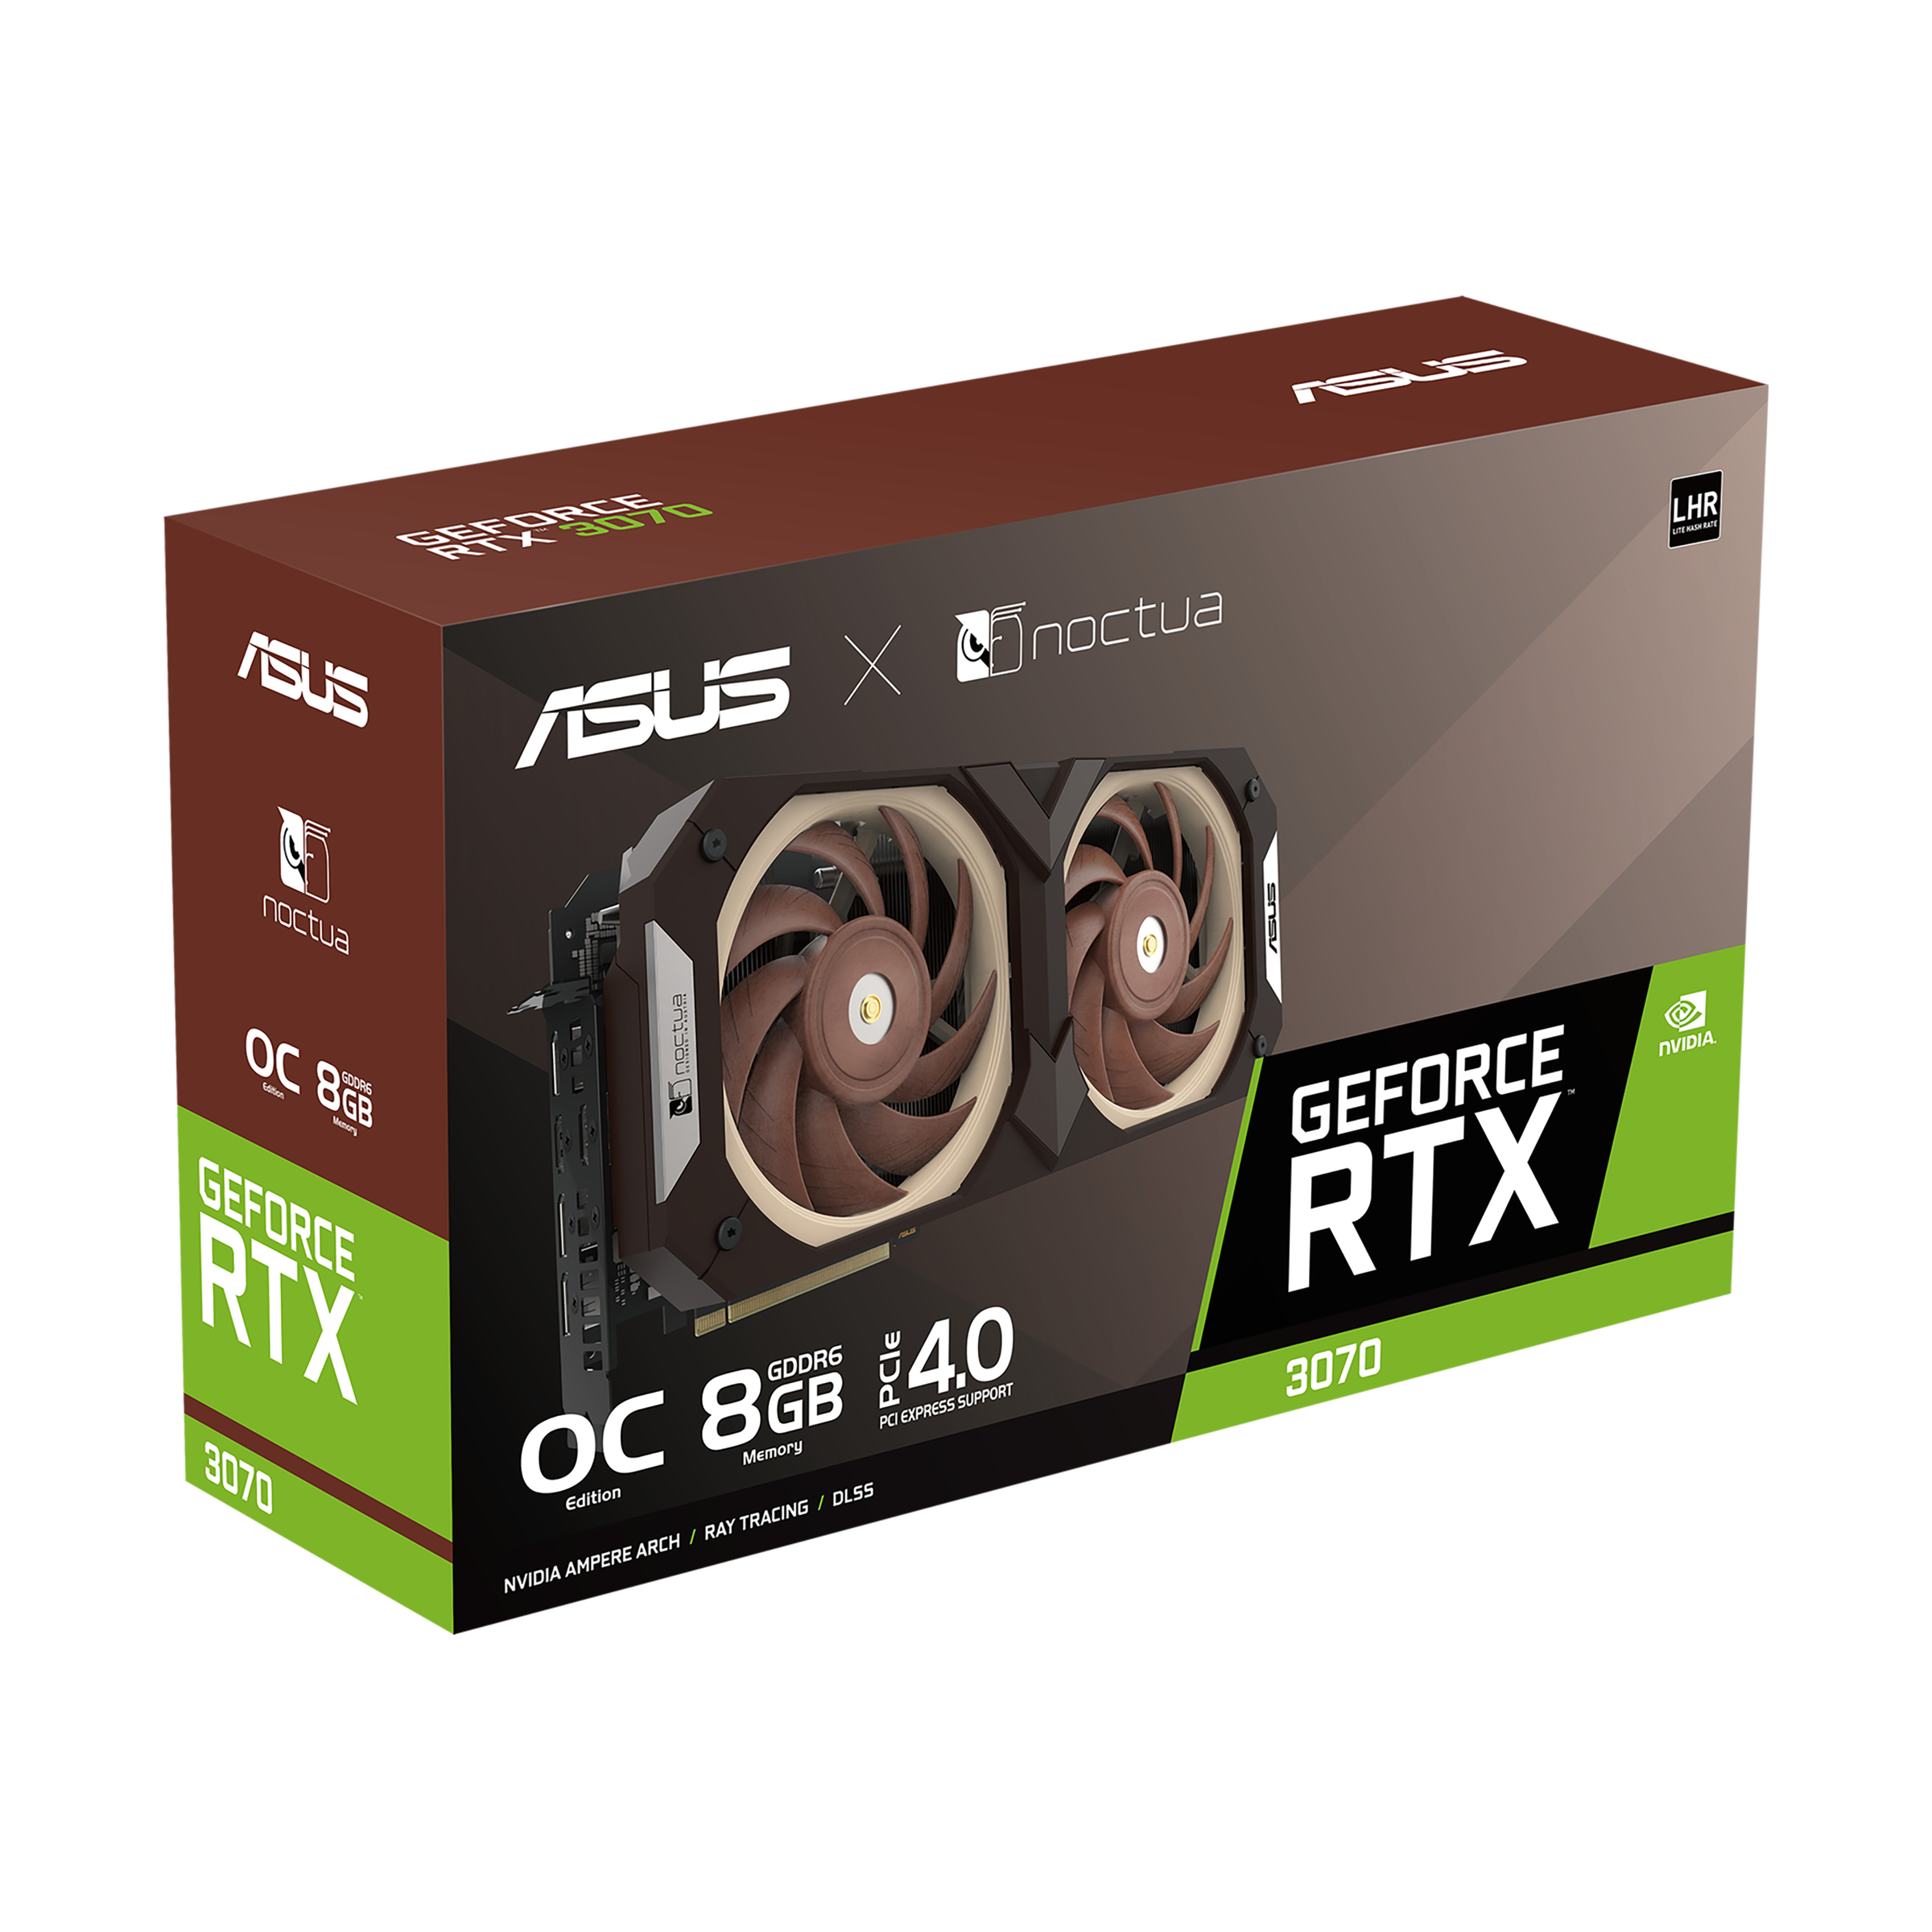 ASUS GeForce RTX 3070 Noctua OC Edition, Graphics Card